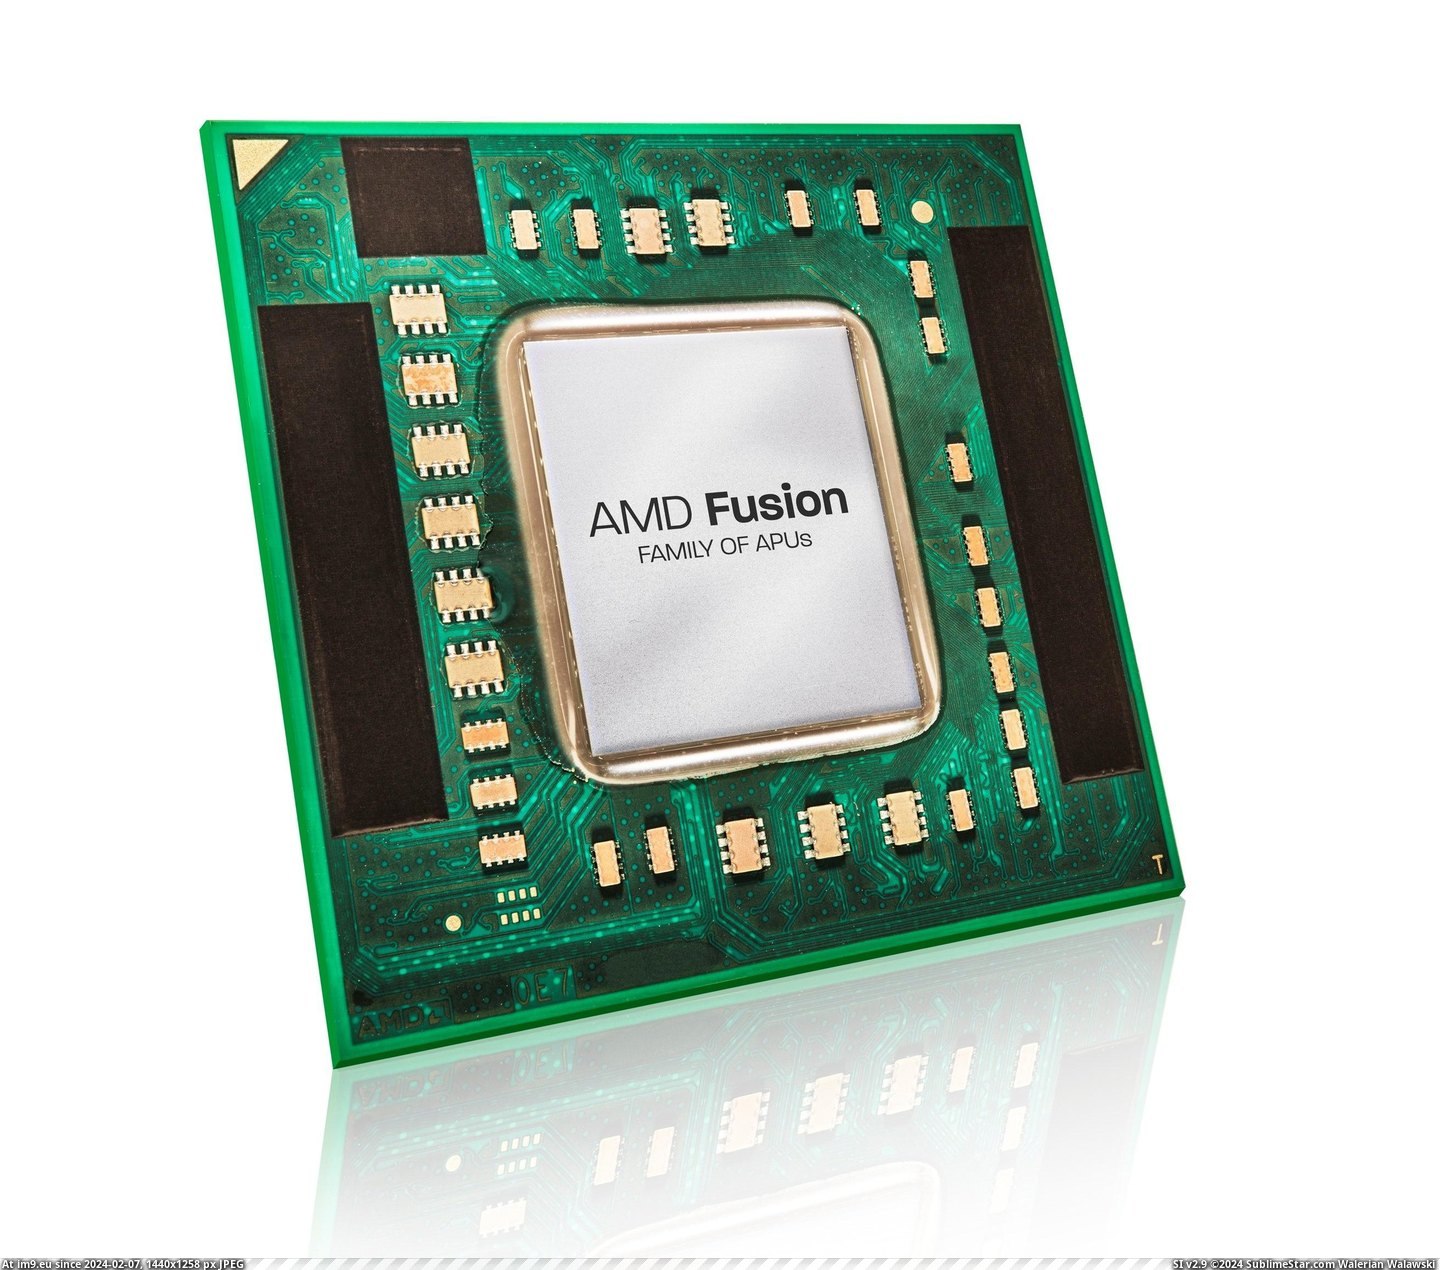 #Fusion #Apu #Amd AMD Fusion APU Pic. (Изображение из альбом Rehost))